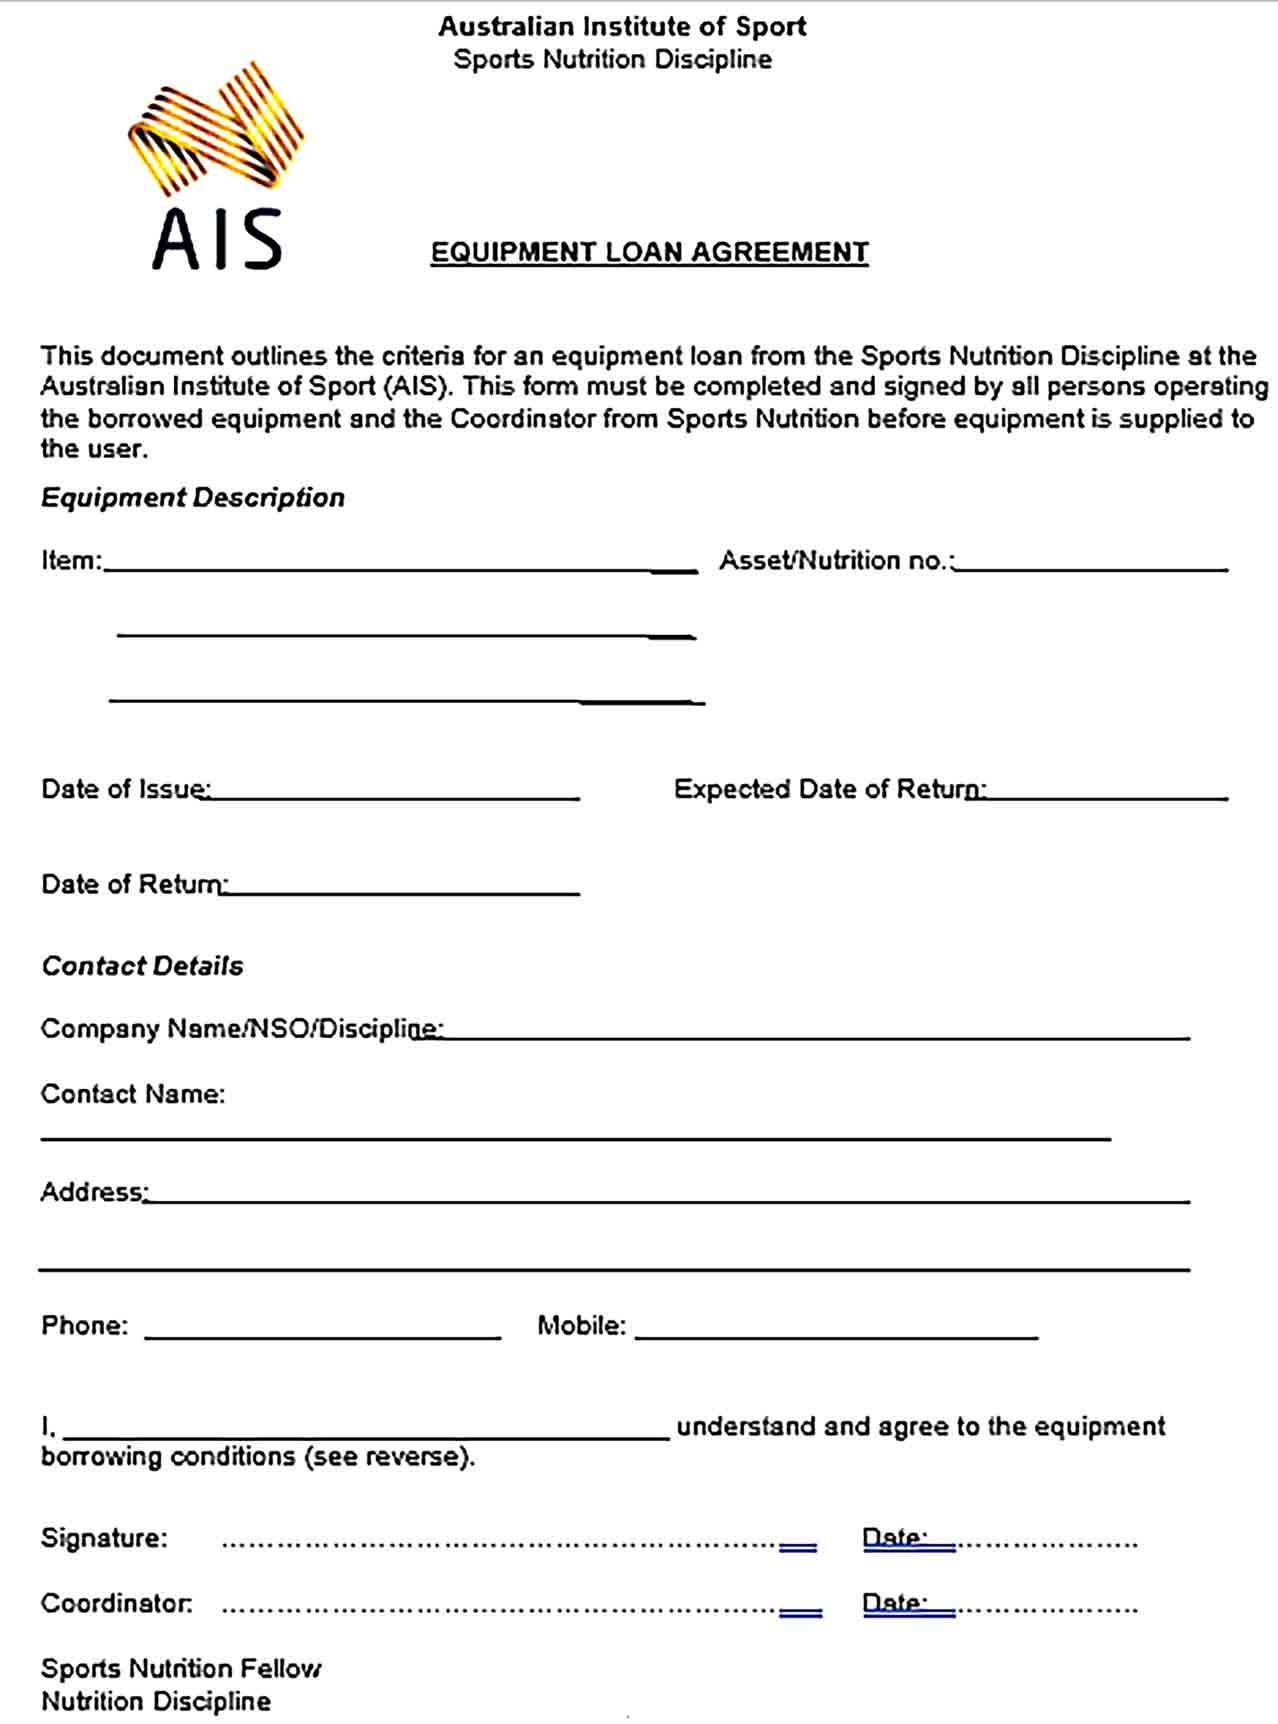 Sample Sports Nutrition Equipment Loan Agreement